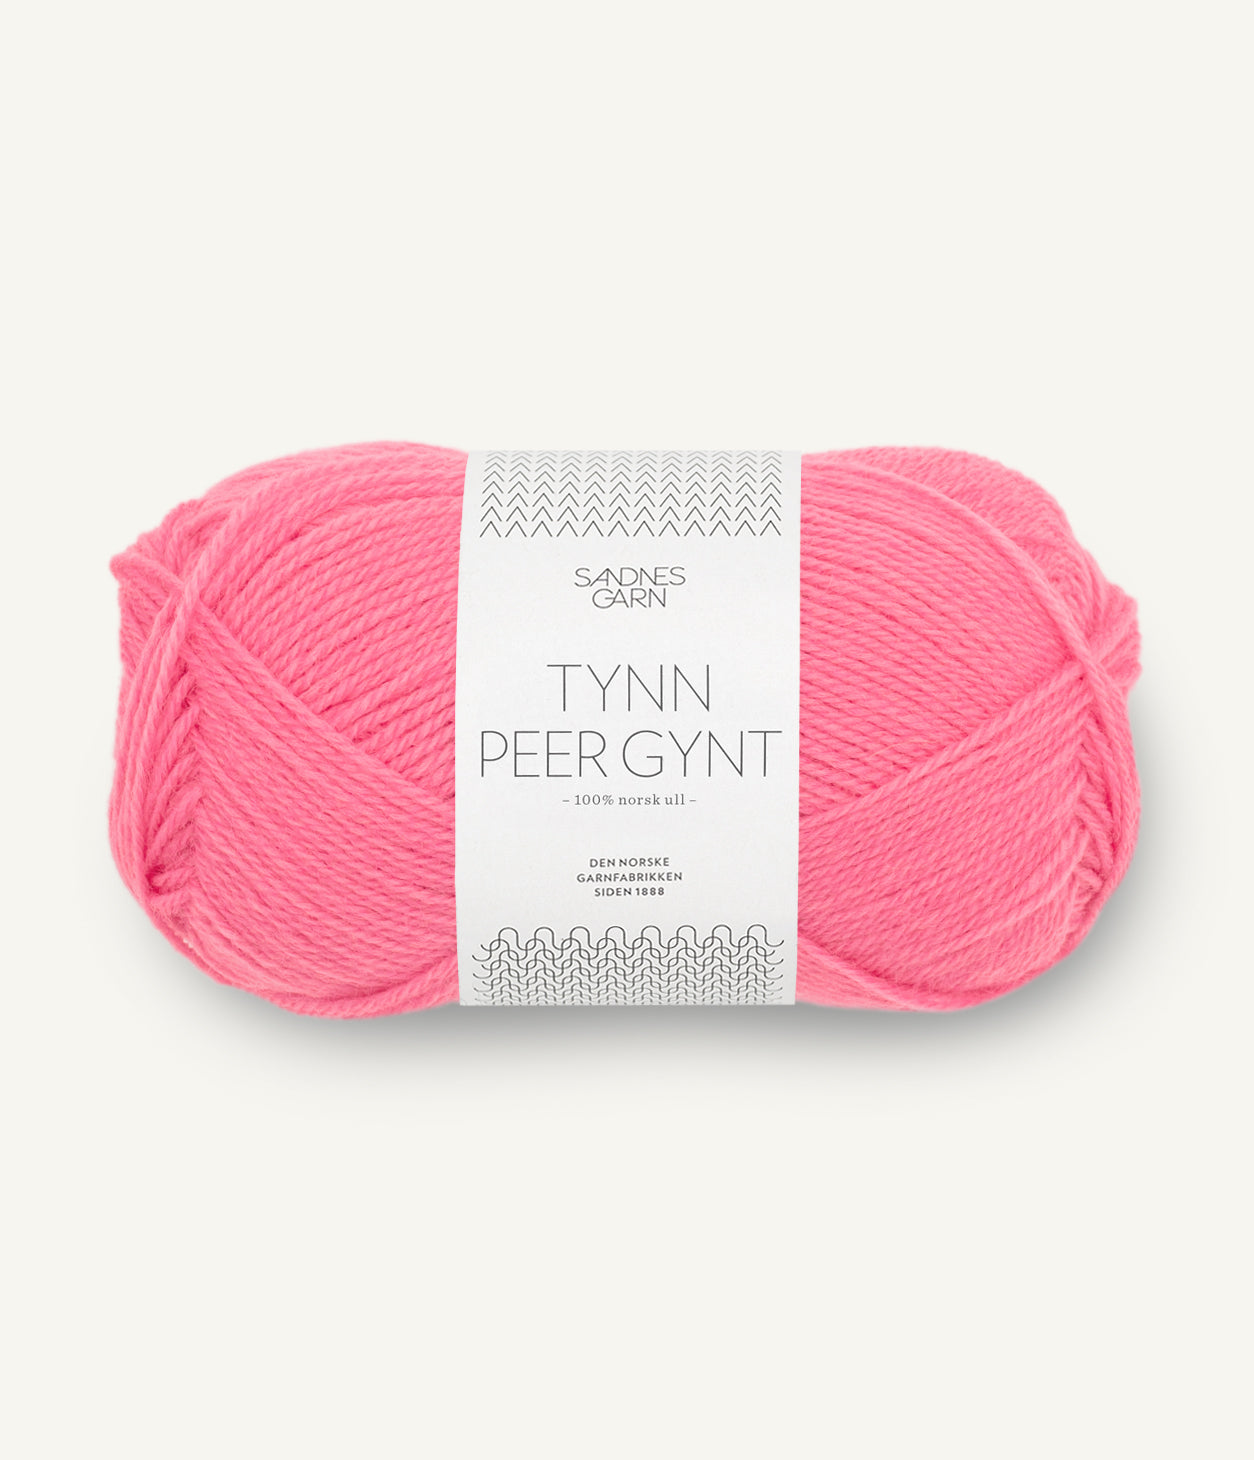 4315 Bubblegum Pink Tynn Peer Gynt Sandnes Garn